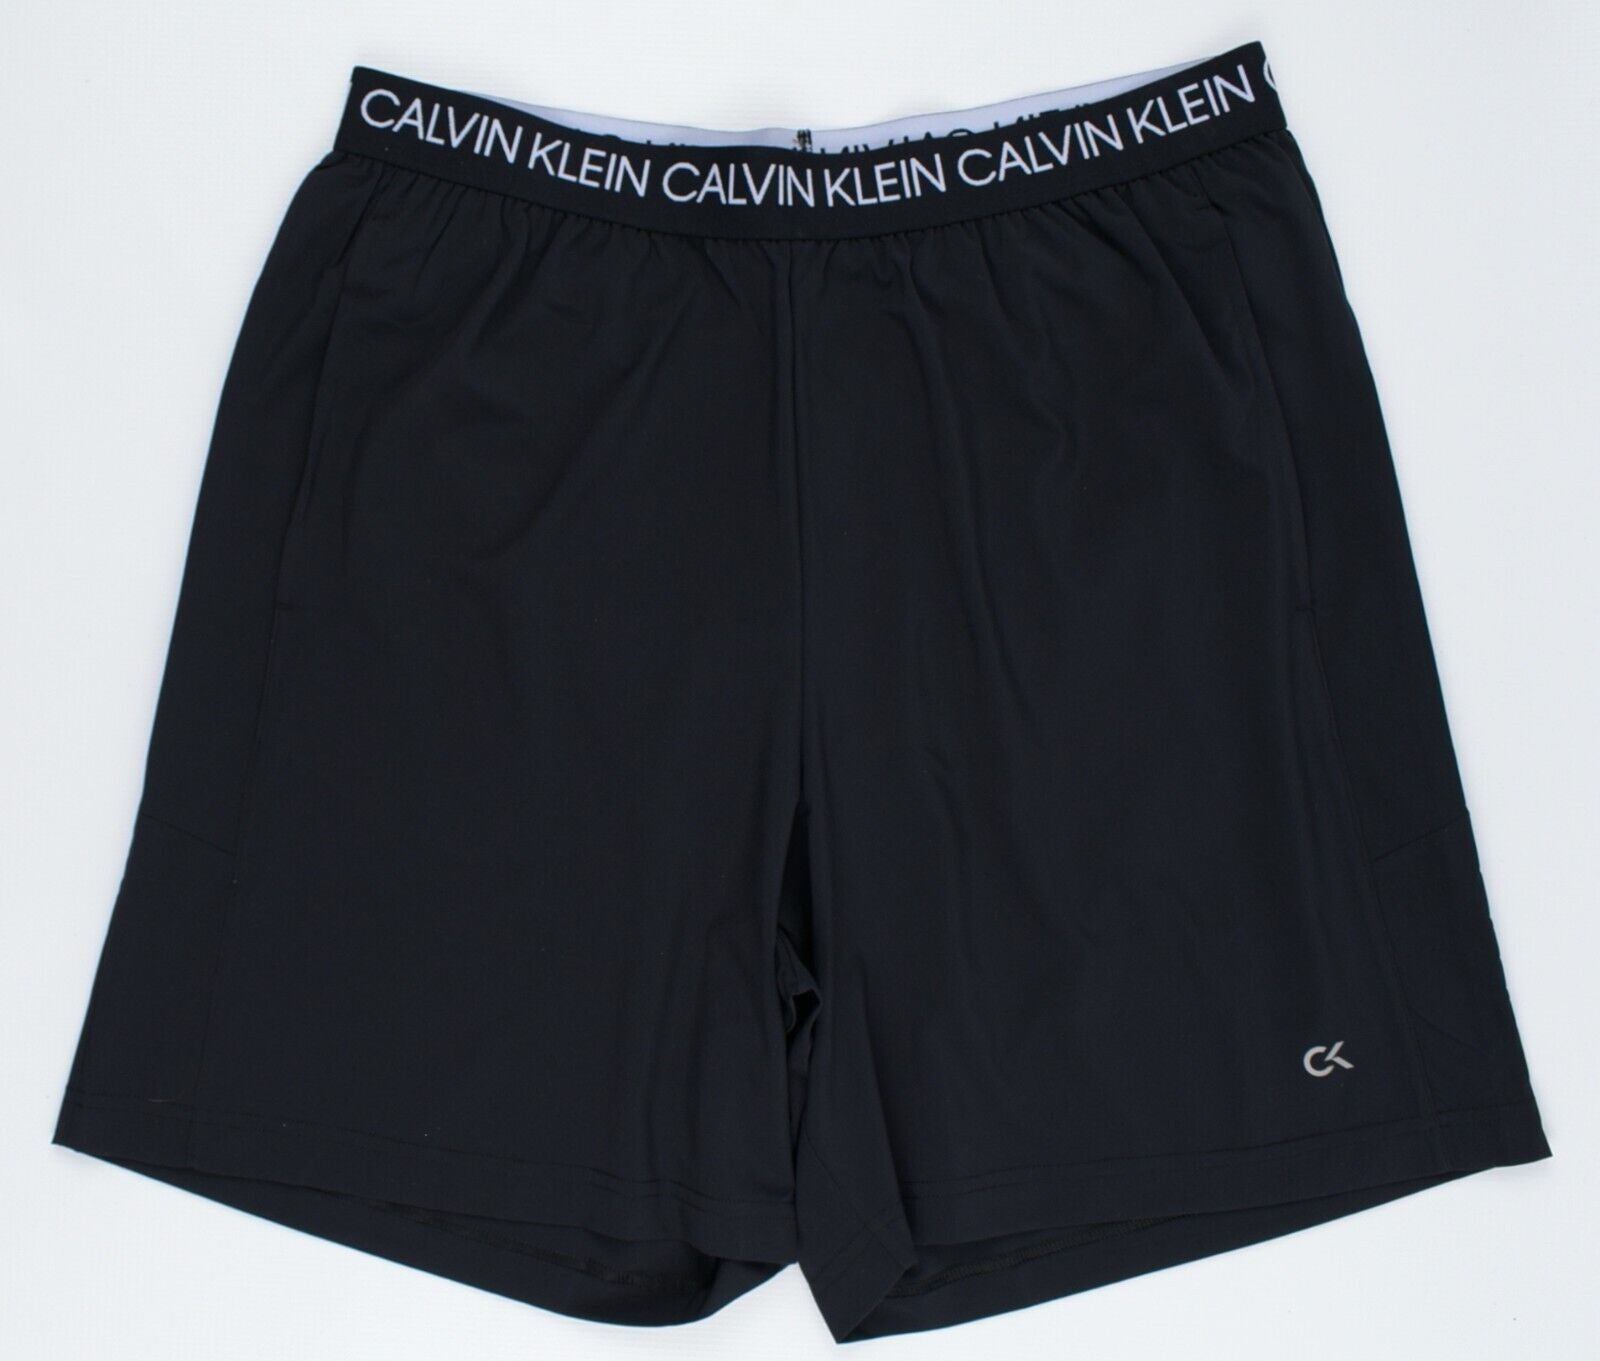 CALVIN KLEIN Performance:  Men's Essential Sports Shorts, Black, size M